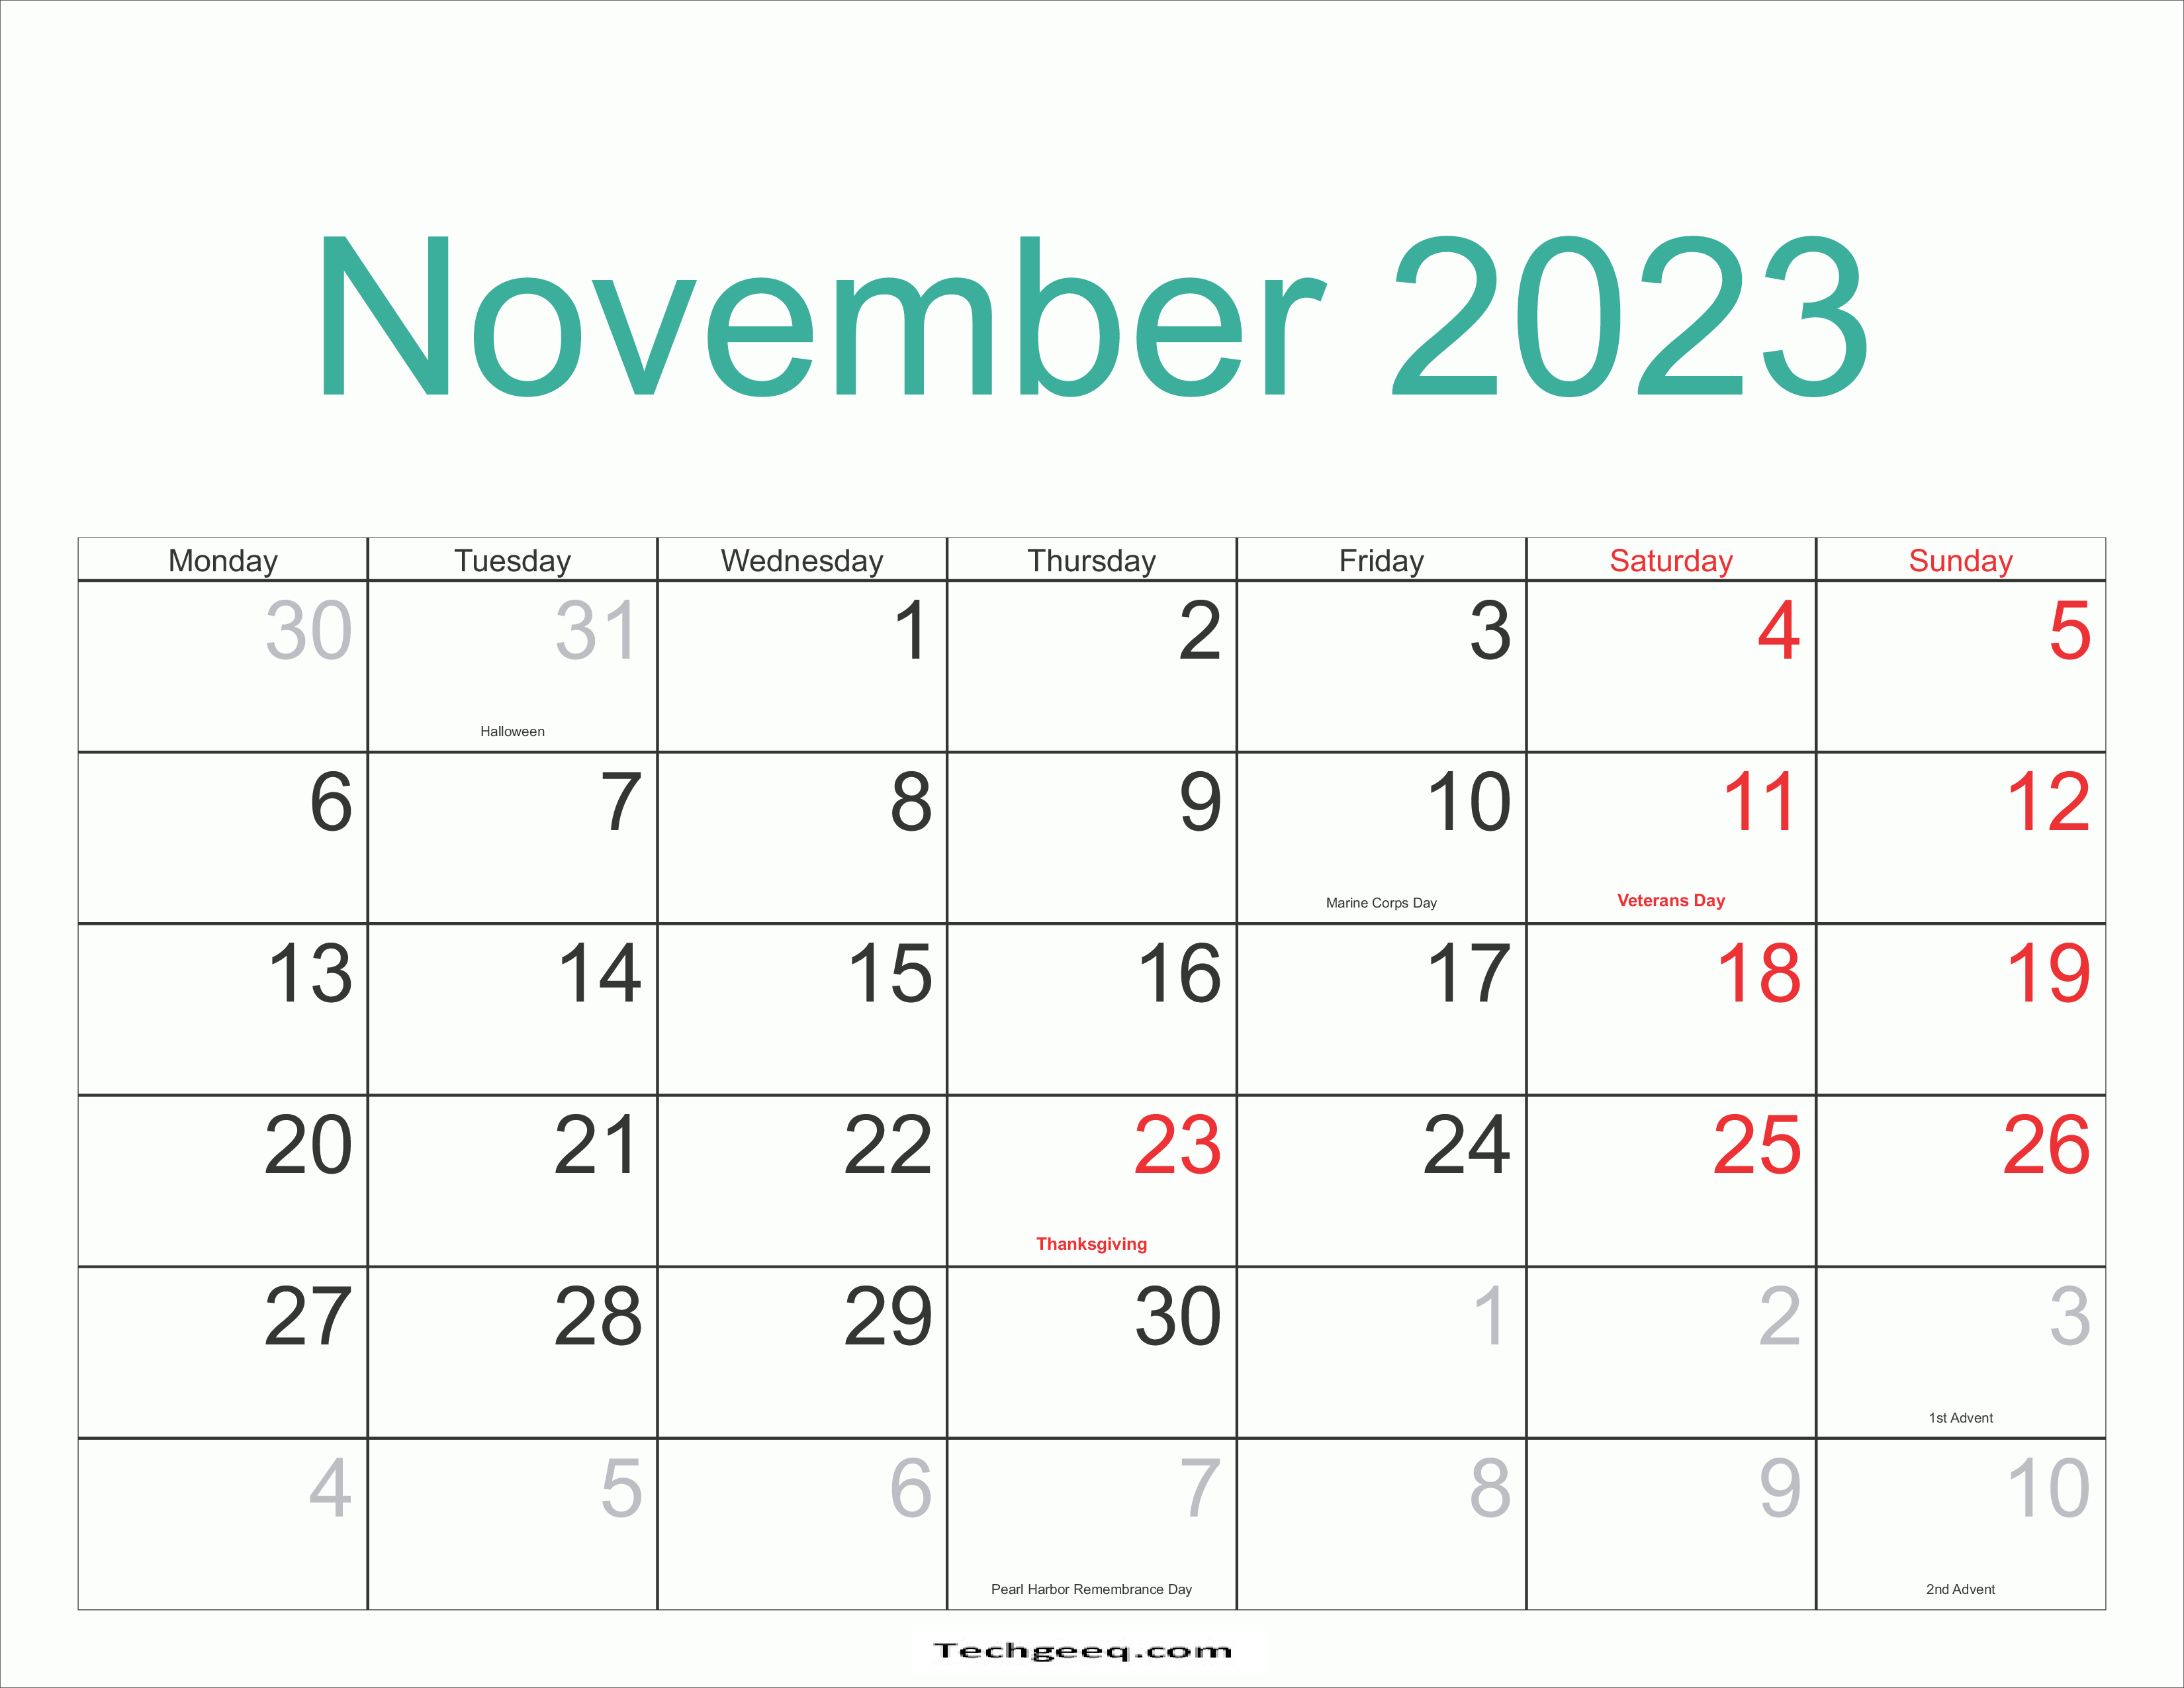 November 2023 Holidays Calendar